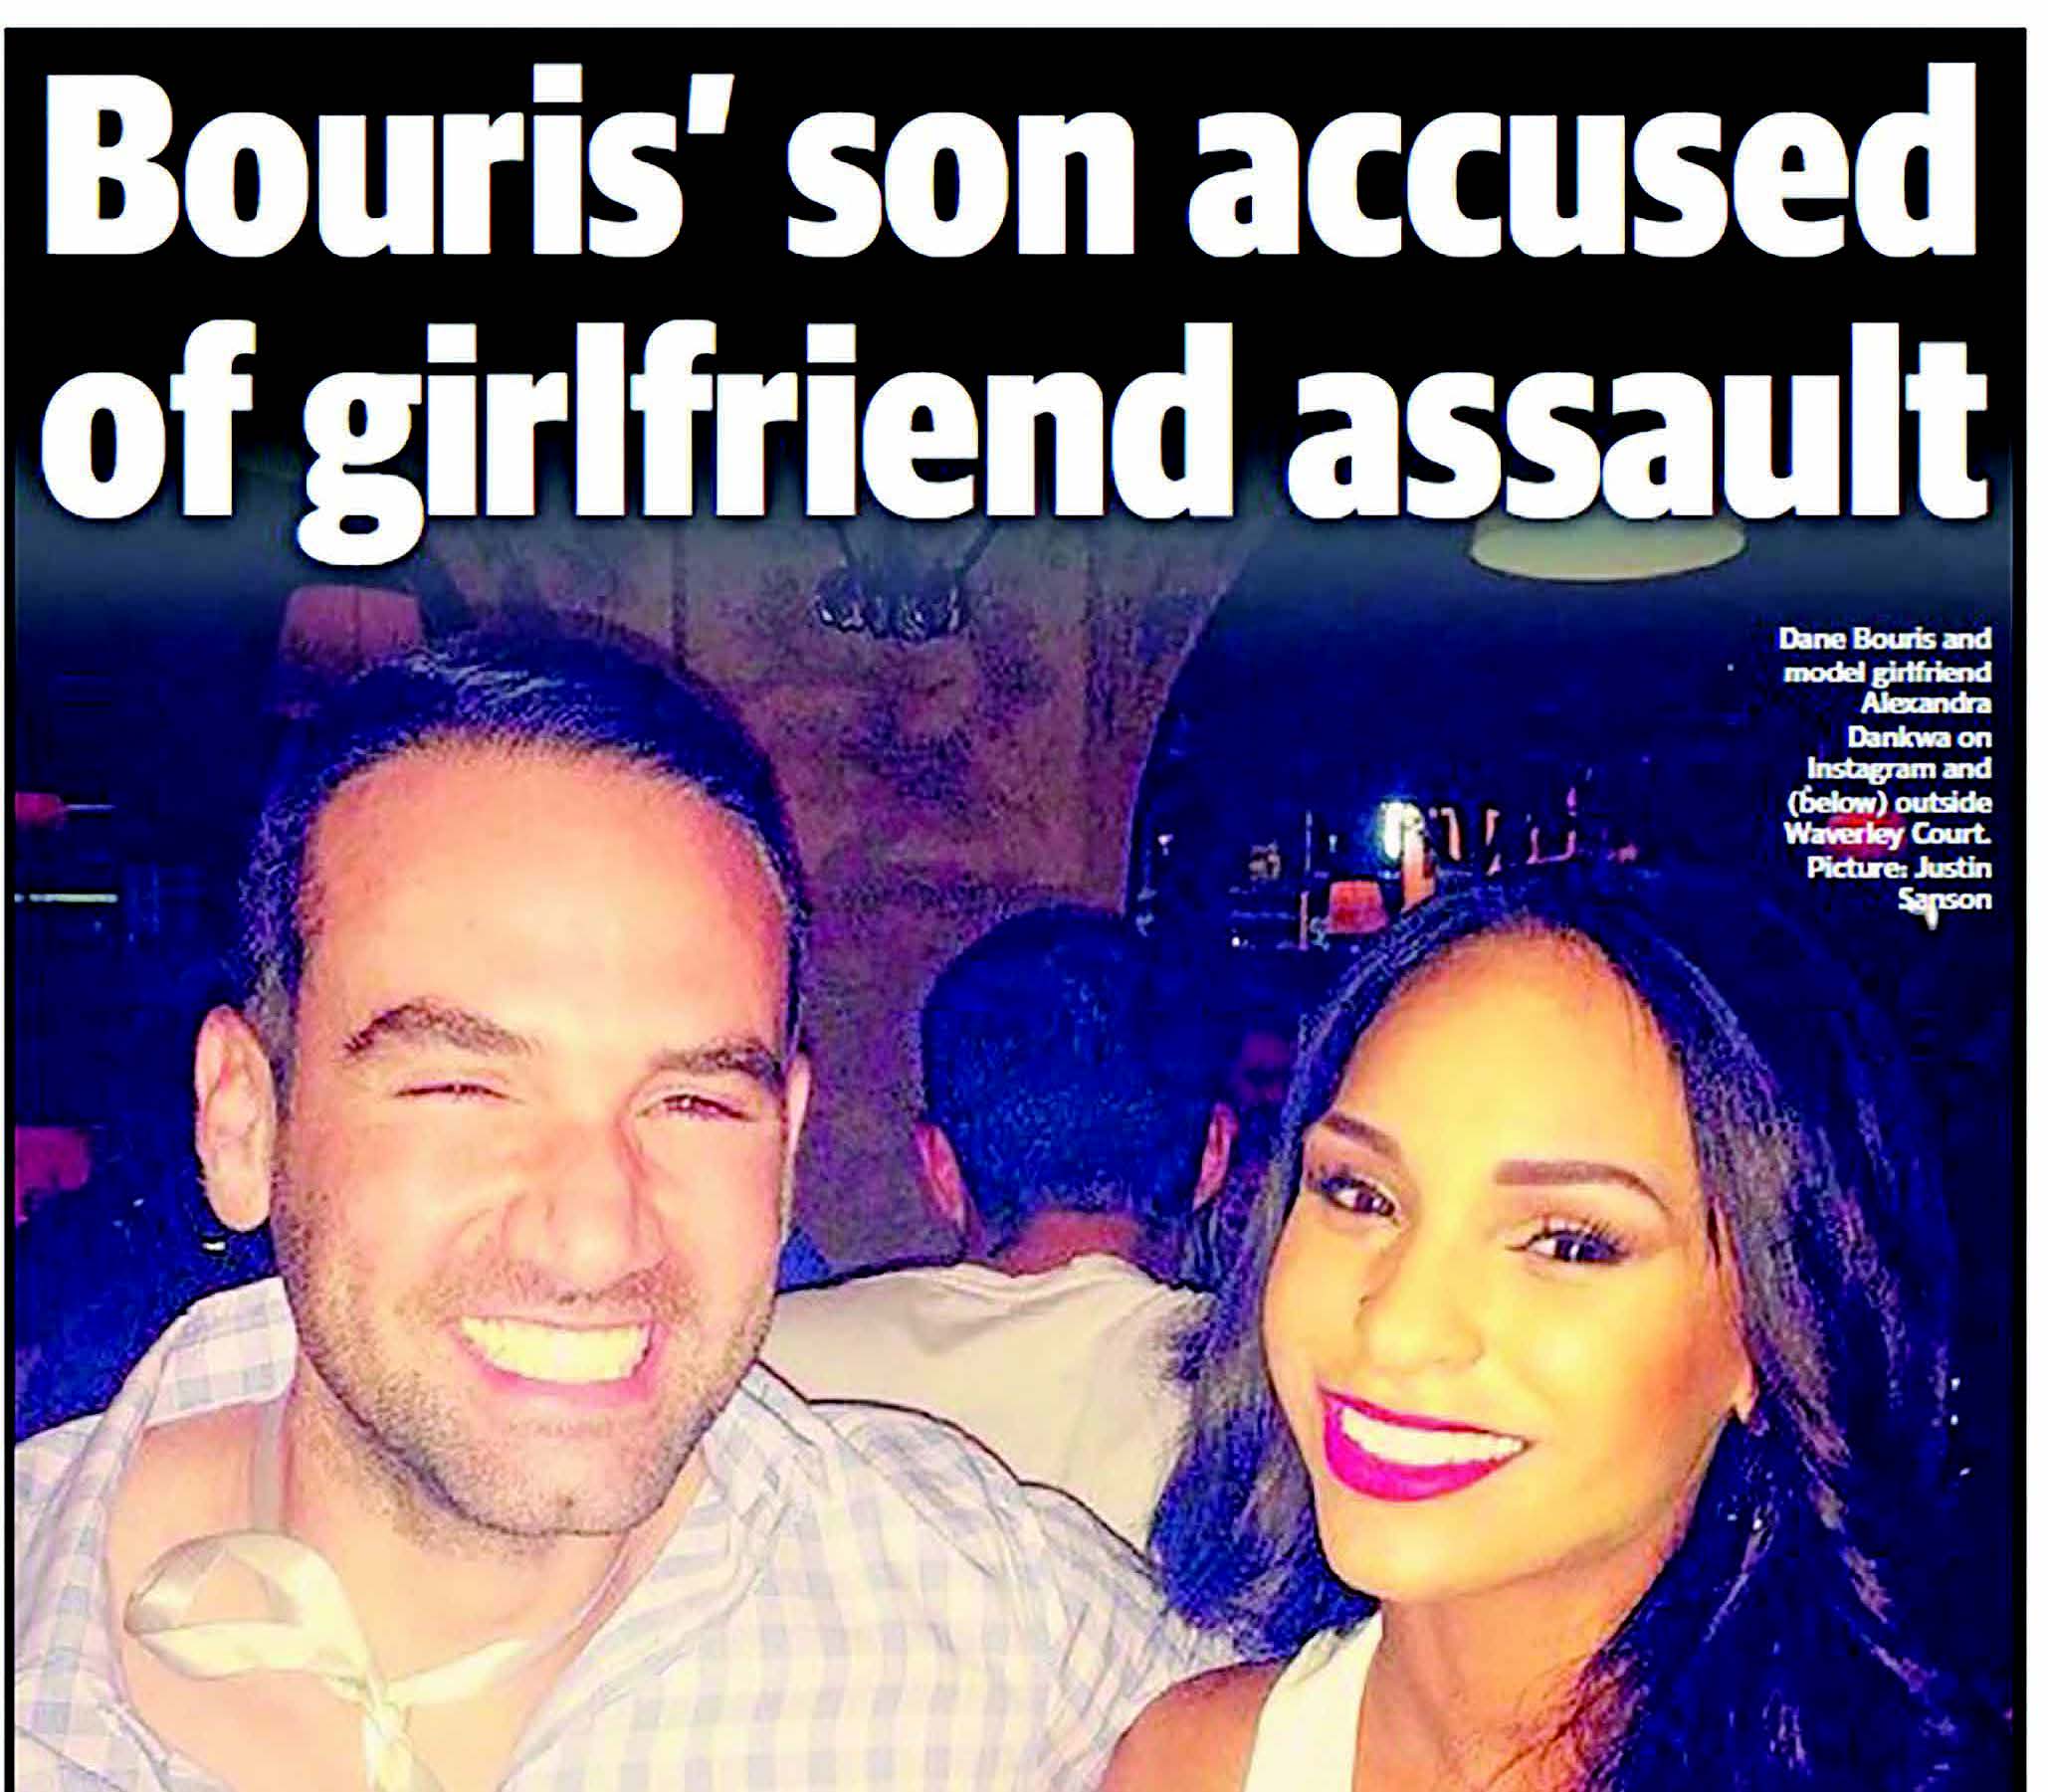 Headline: Bouris' son accused of girlfriend assault. Caption: Dane Bouris and model girlfriend Alexandra Dankwa on Instagram and (below) outside Waverley Court. Picture: Justin Sanson